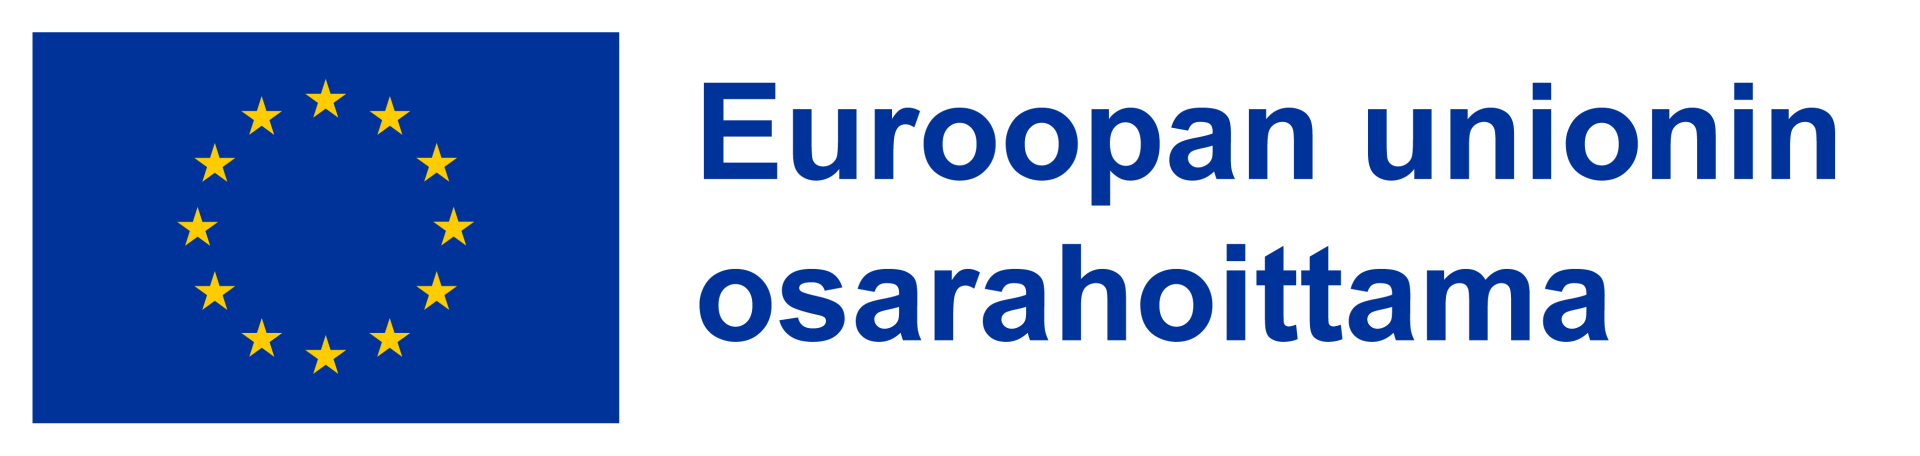 ESR-logo Euroopan unionin osarahoittama